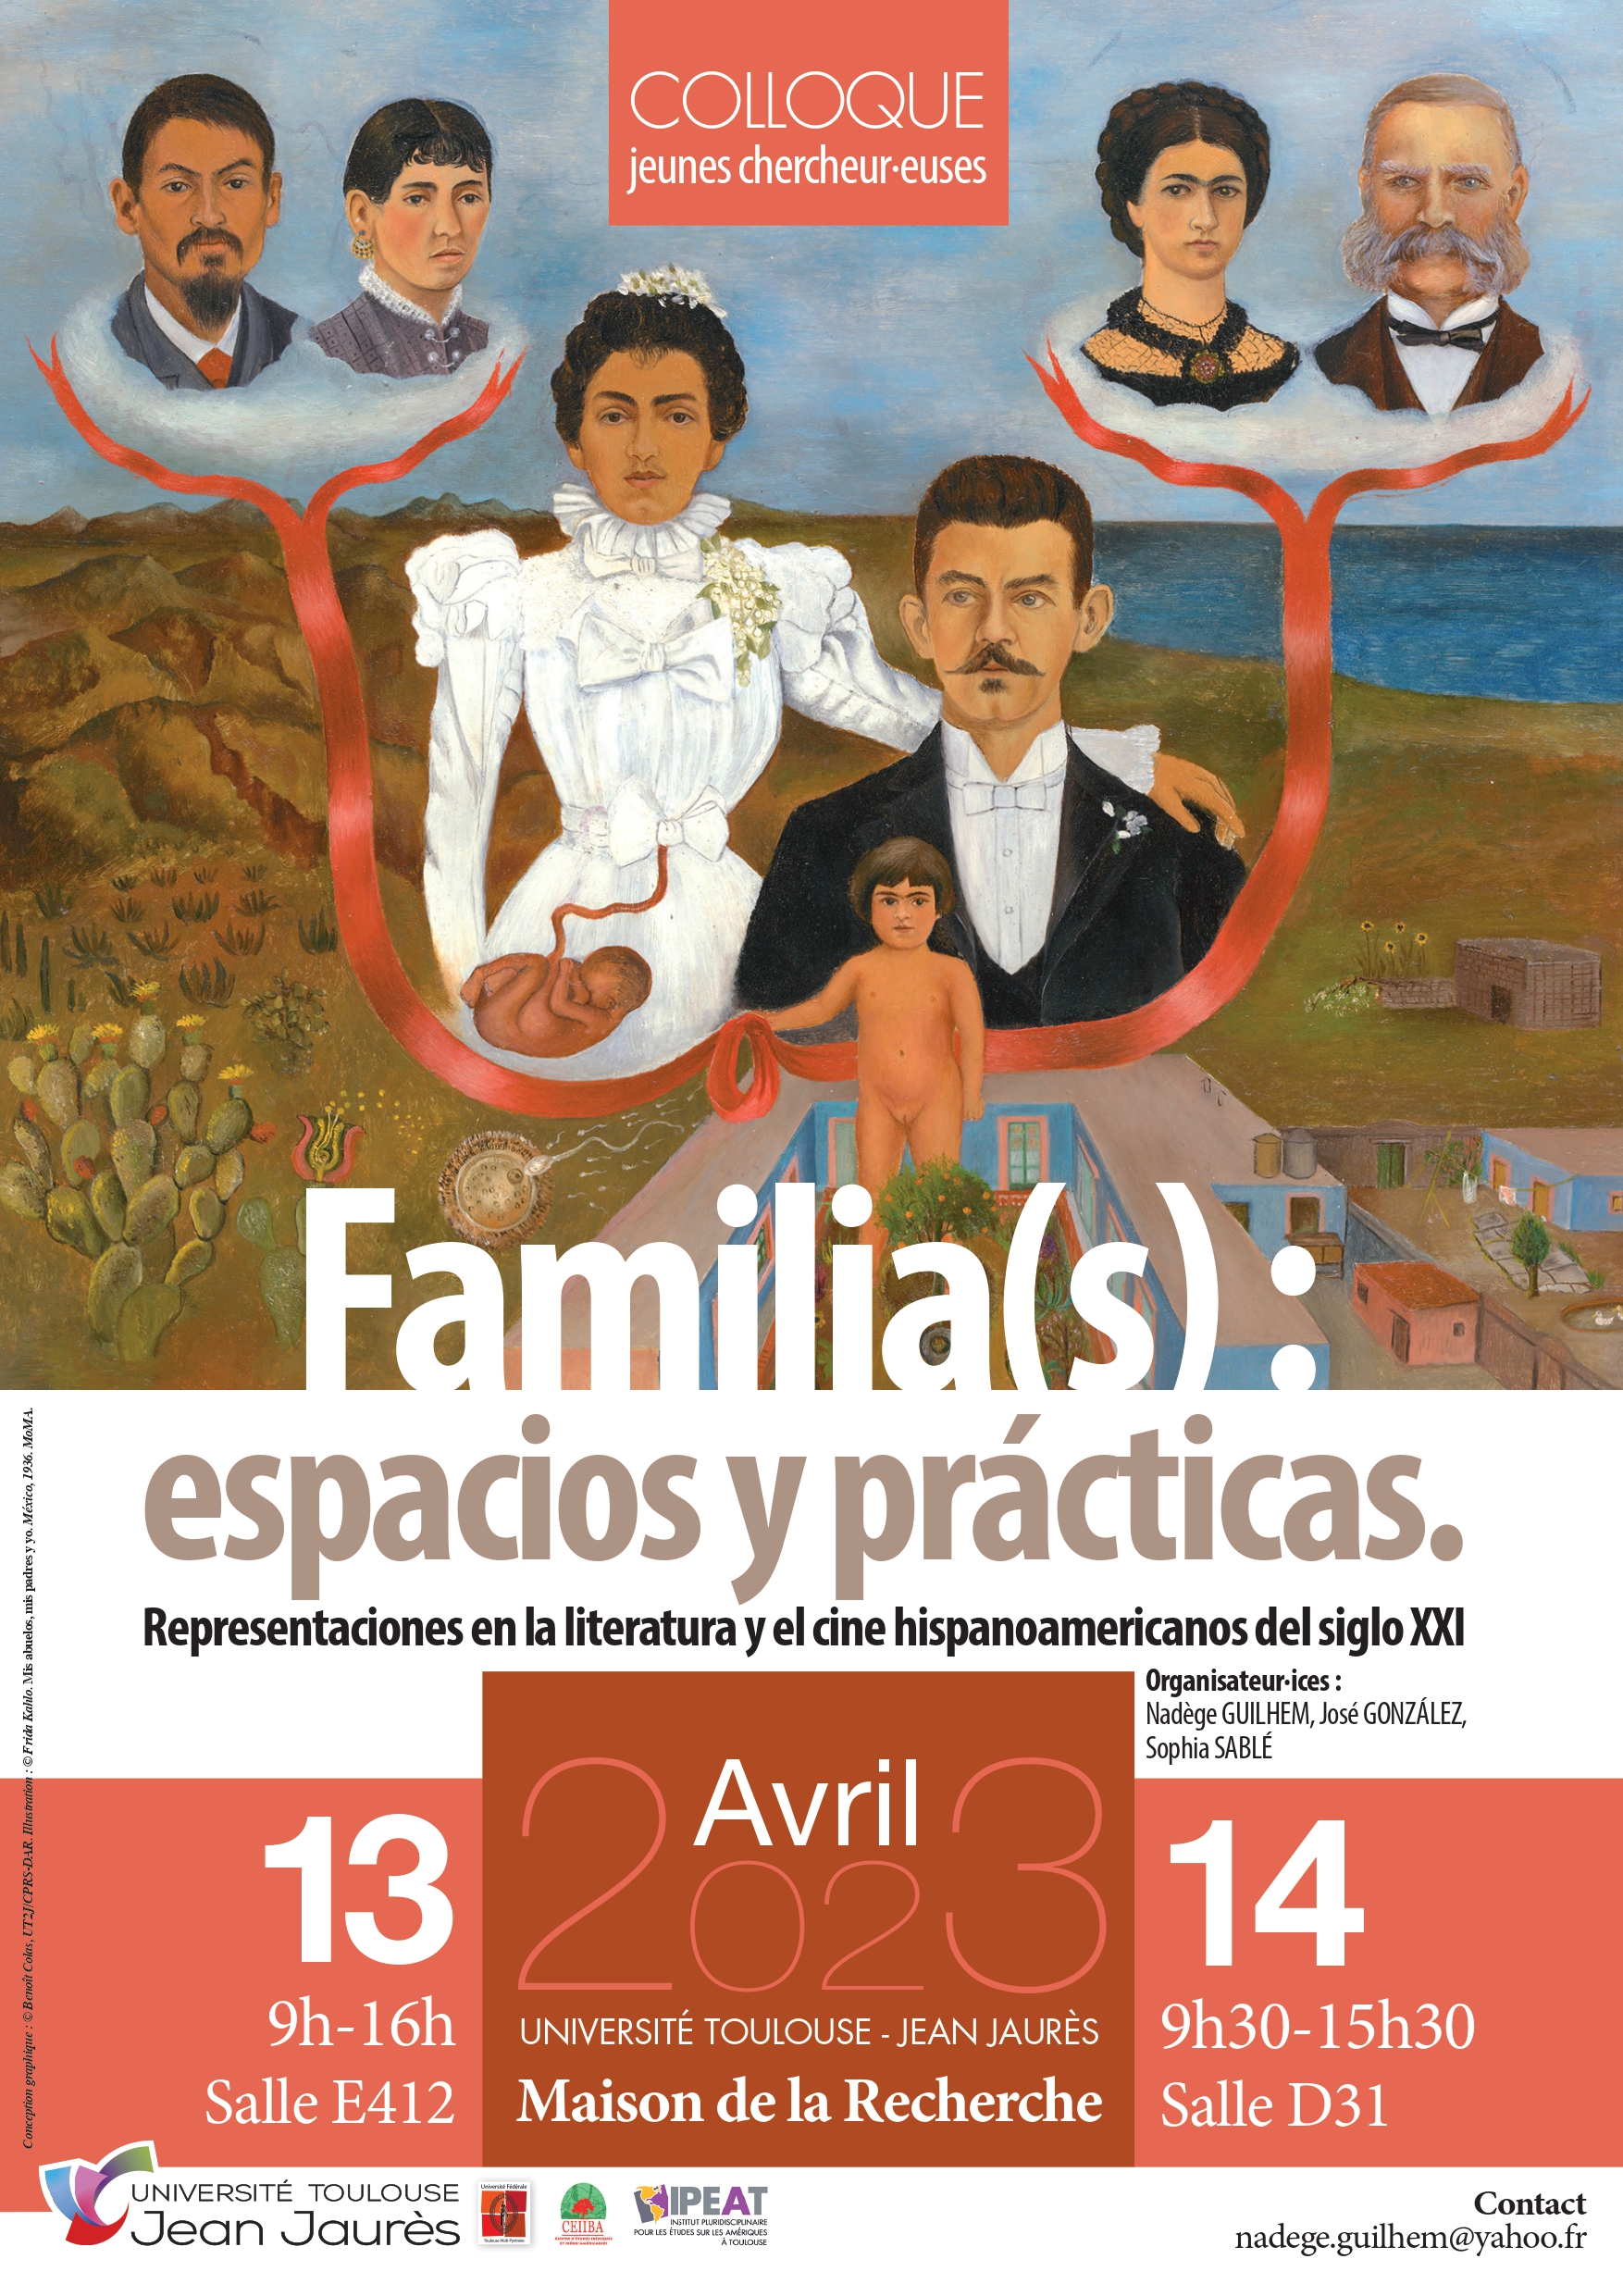 Affiche Colloque Familia(s) N. Guilhem 13-14 avril 2023